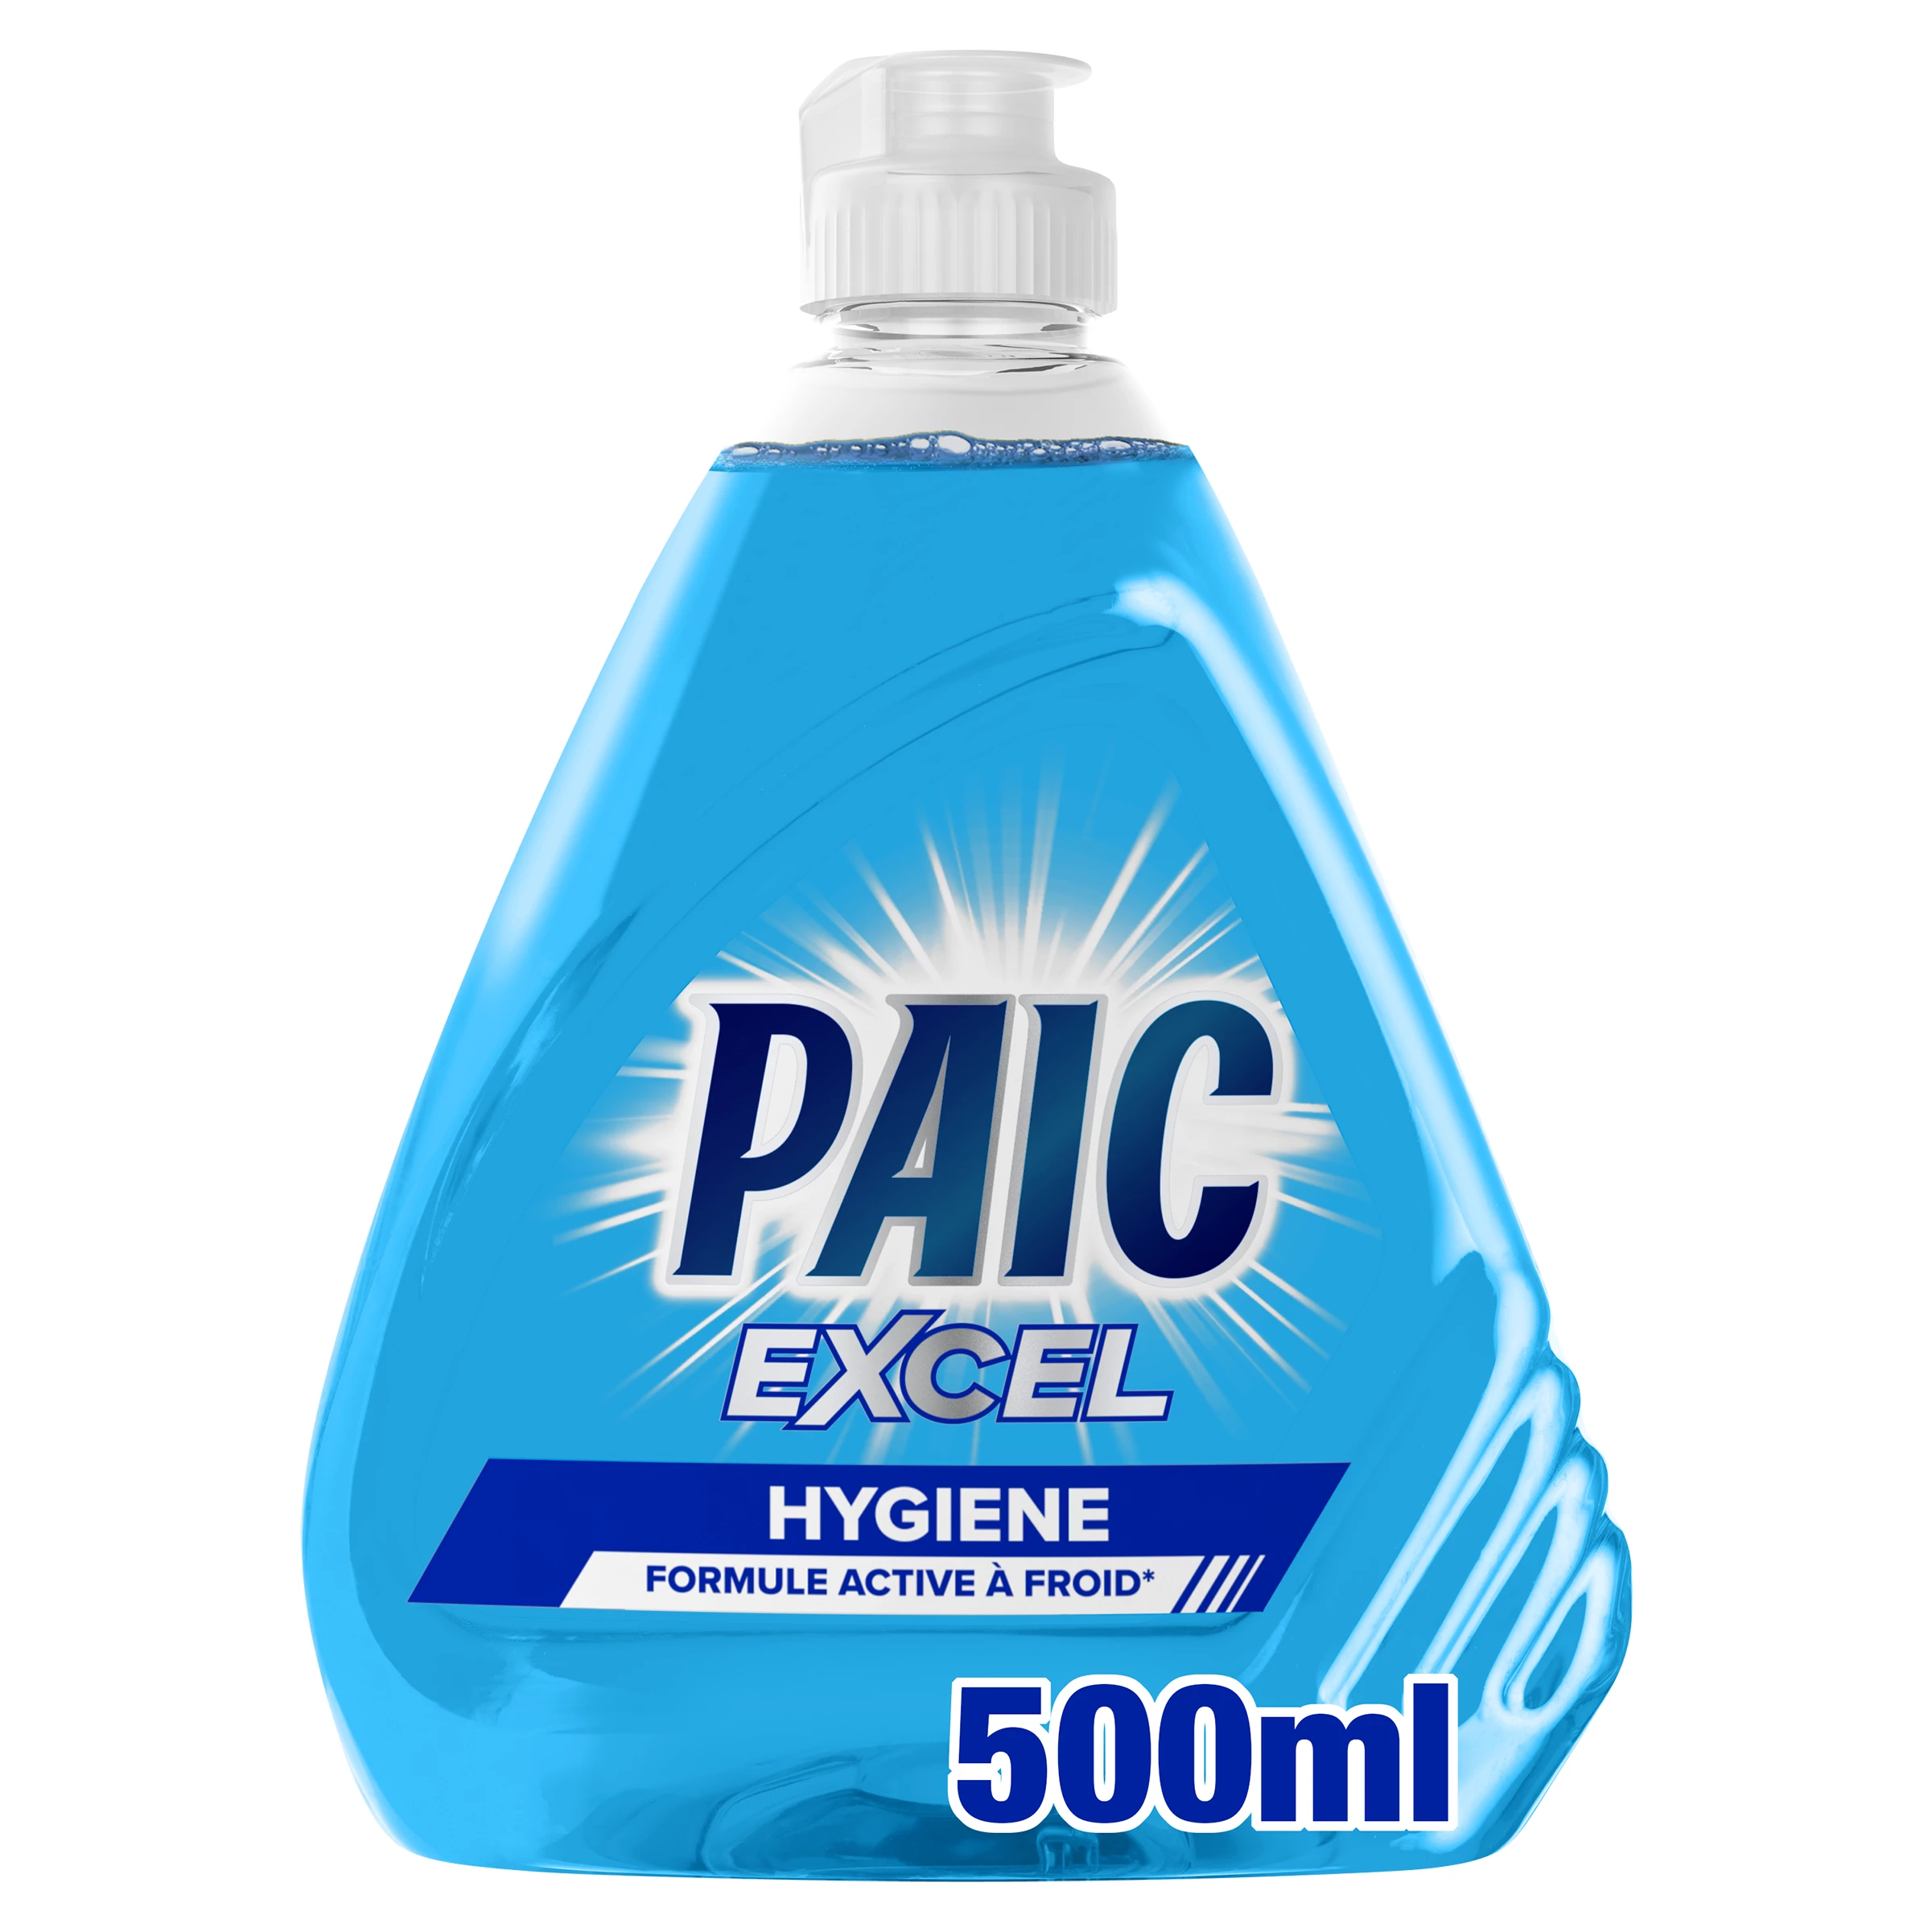 Paic Ultra Braich Igiene 500m